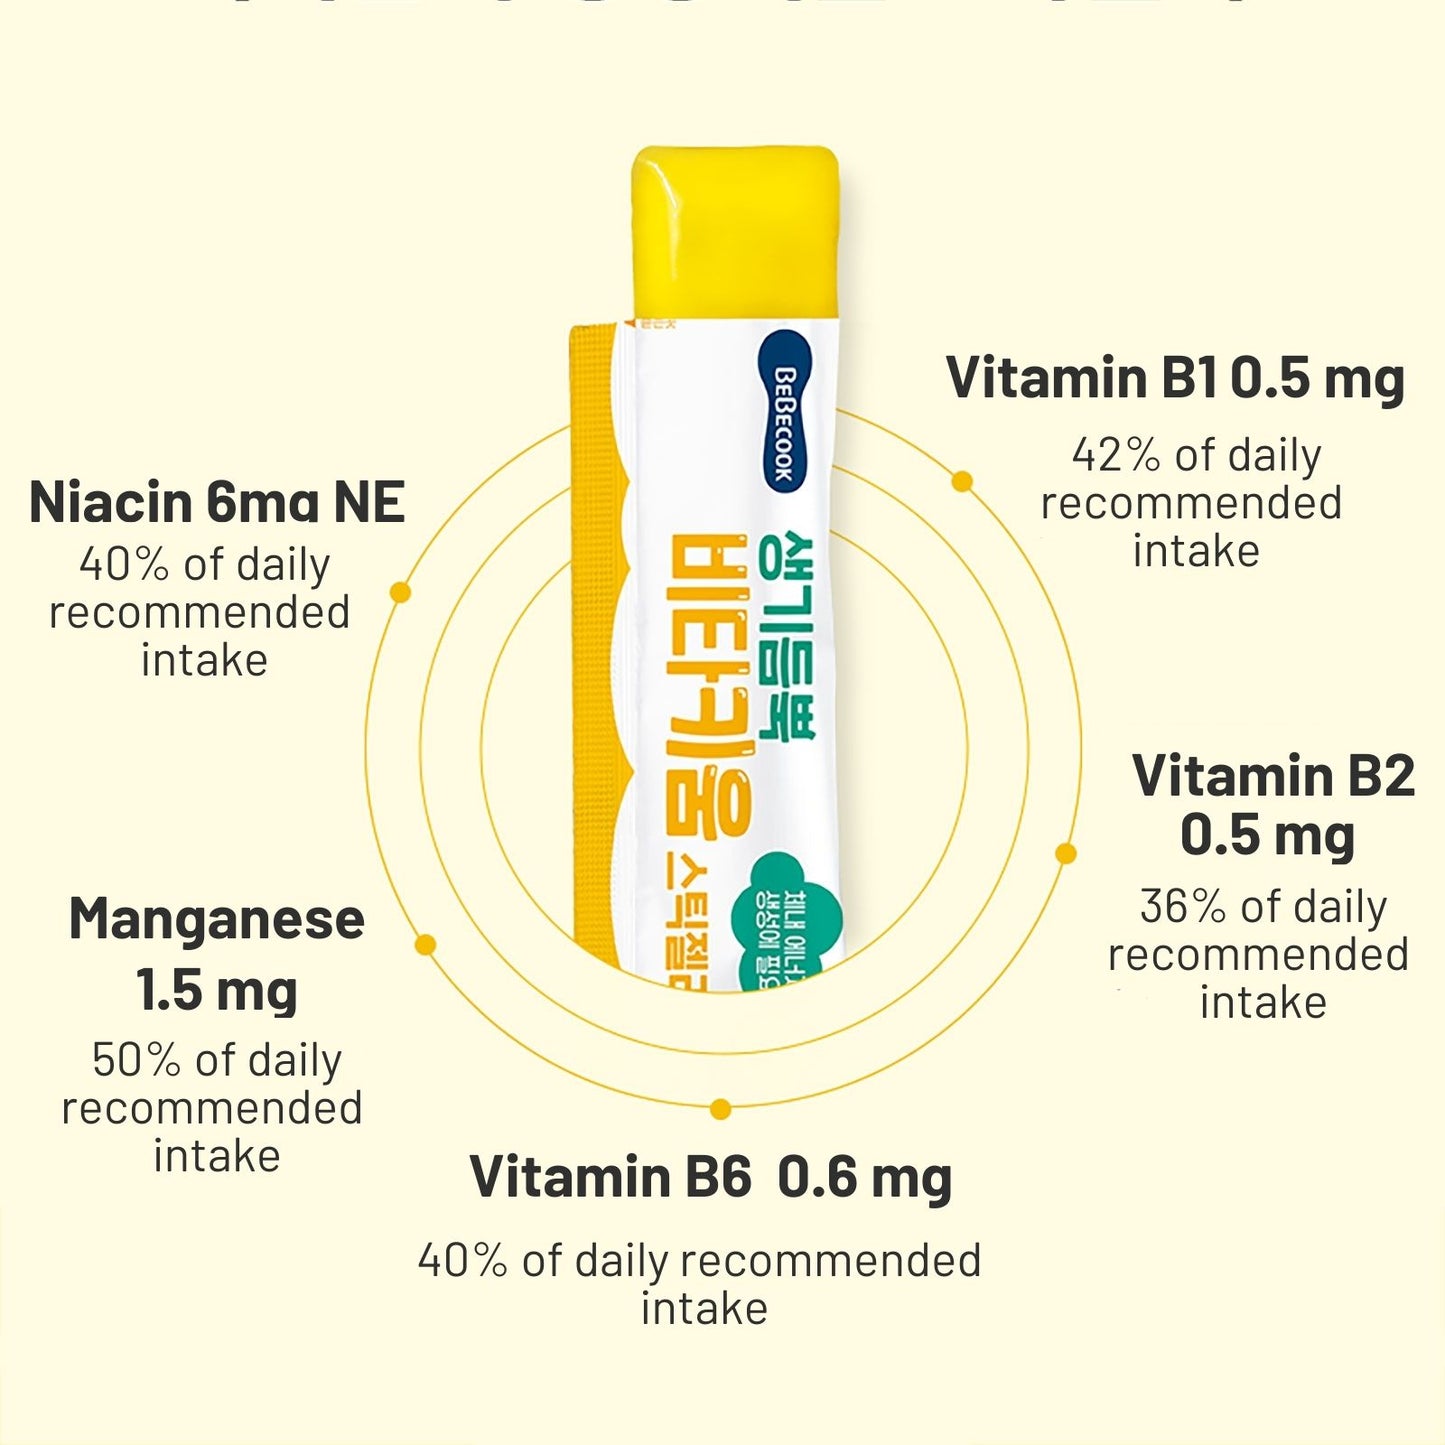 BeBecook - Nutri-Jelly Stick  (Vitamin B & Manganese)